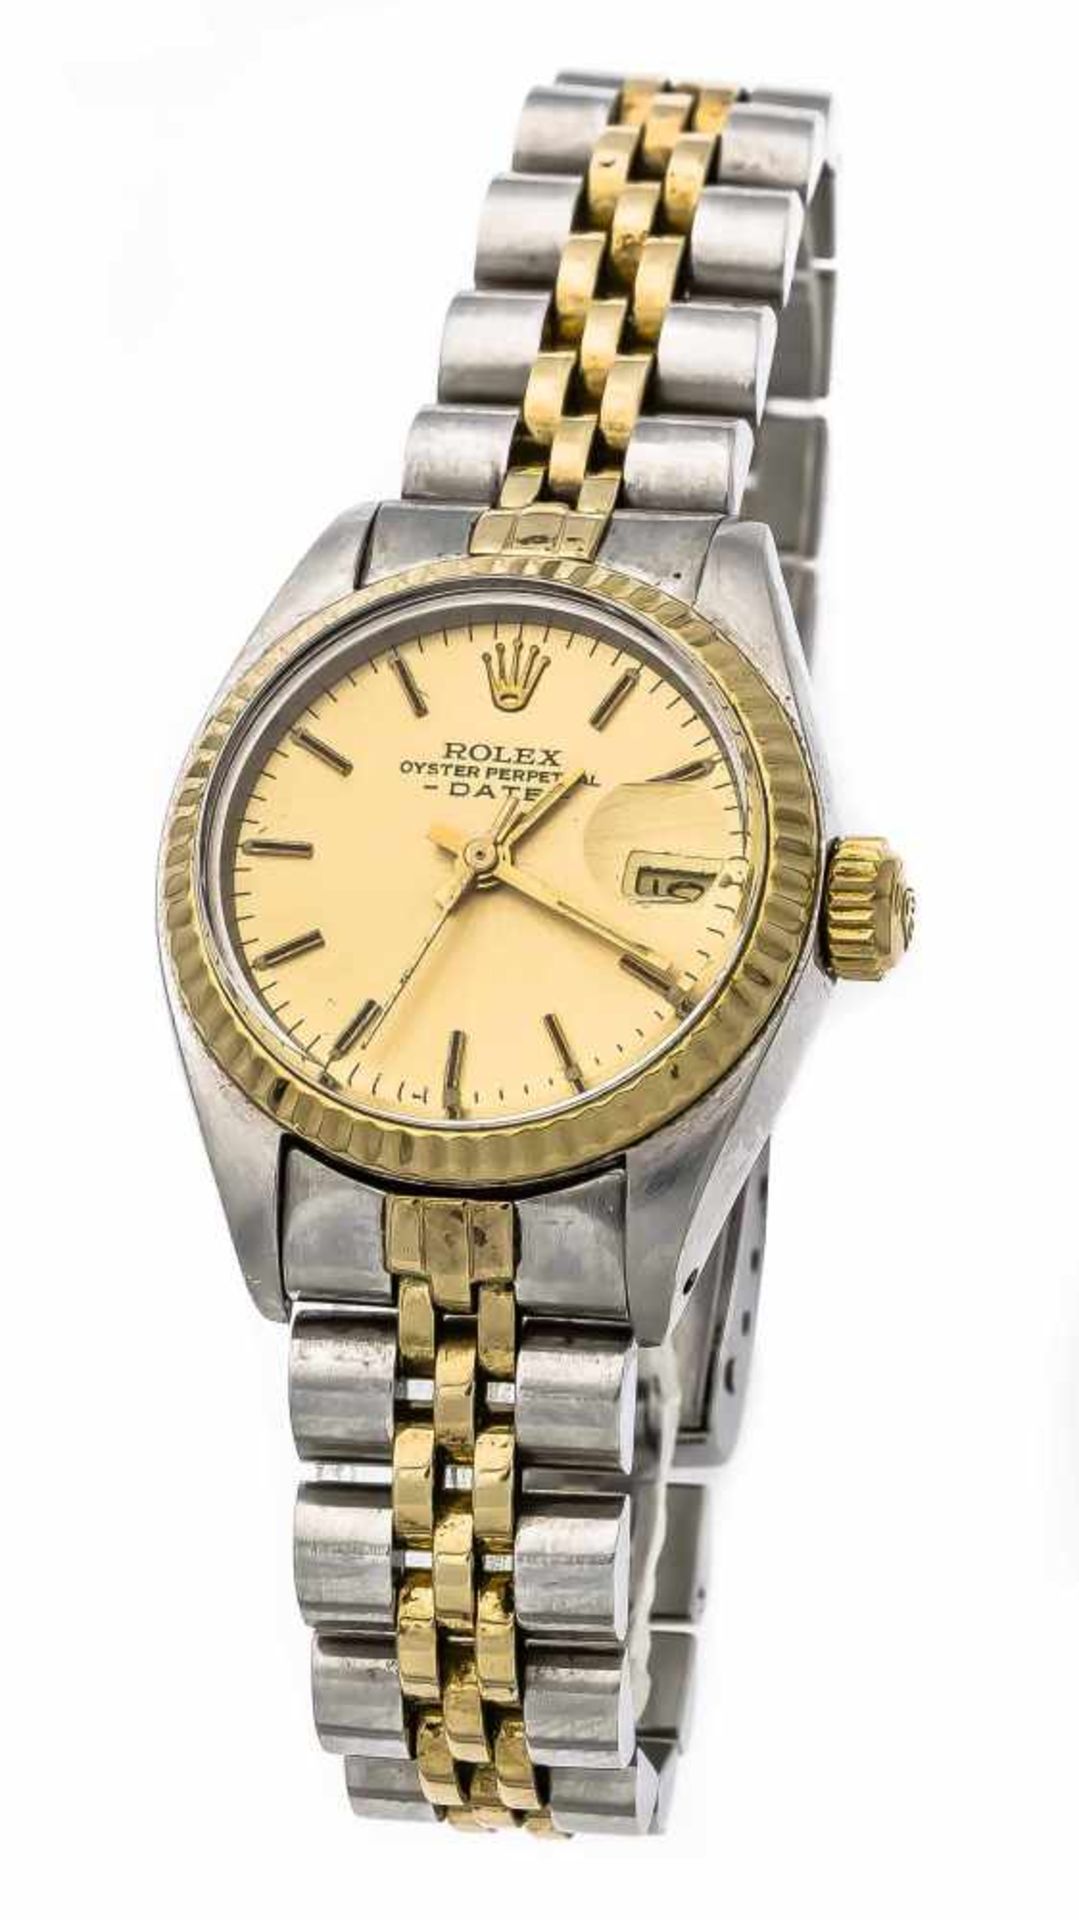 Damen-Rolex, Stahl/Gold 750/000, Oyster Perpetual Date, läuft, goldenes Zifferblatt, Armband Stahl/